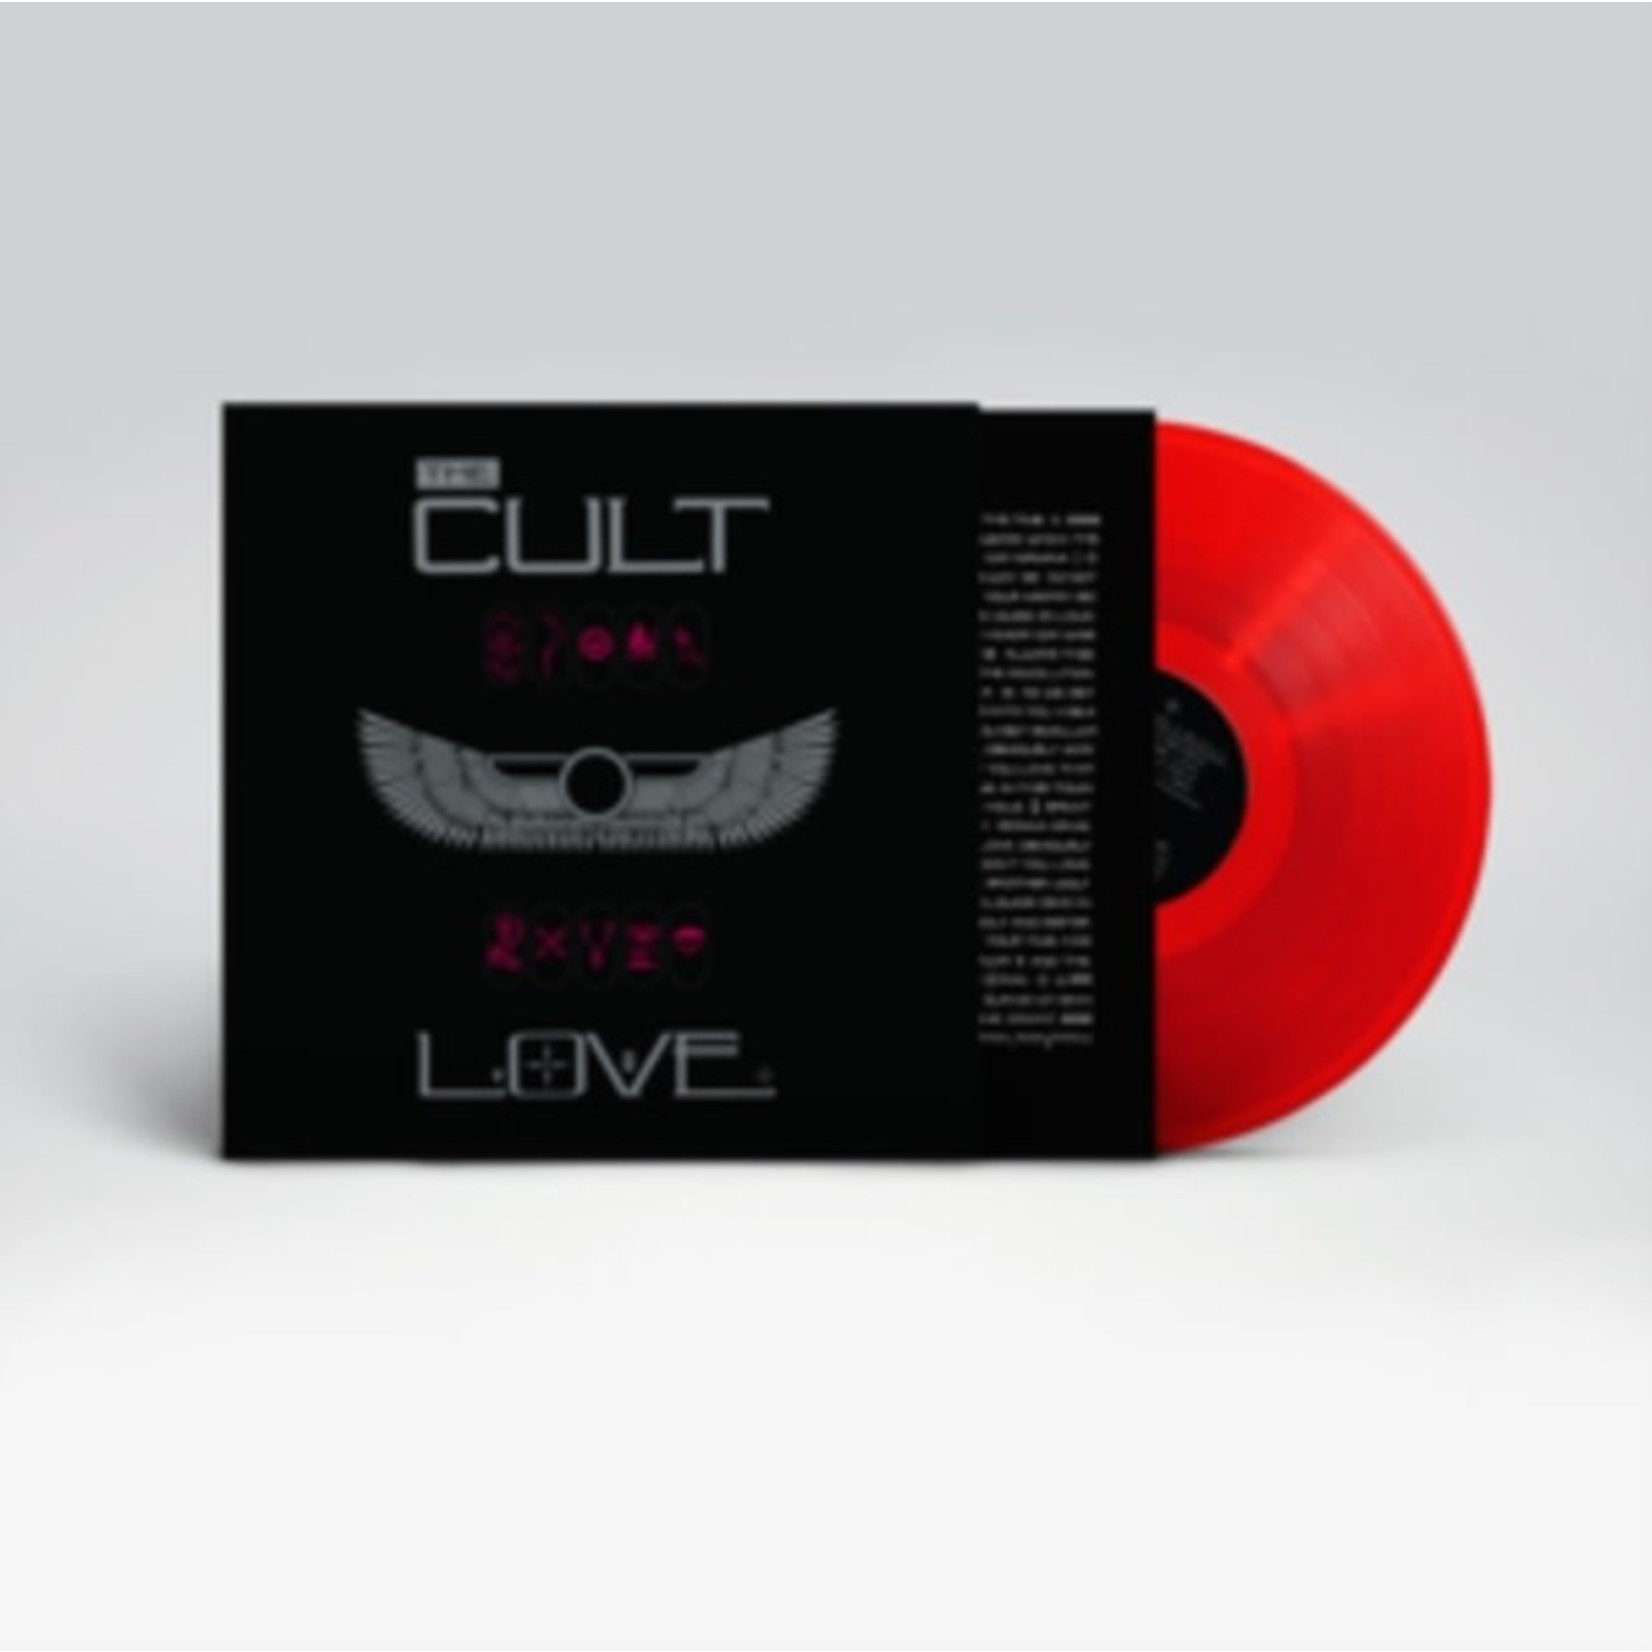 Cult - Love (Red Vinyl) [LP]